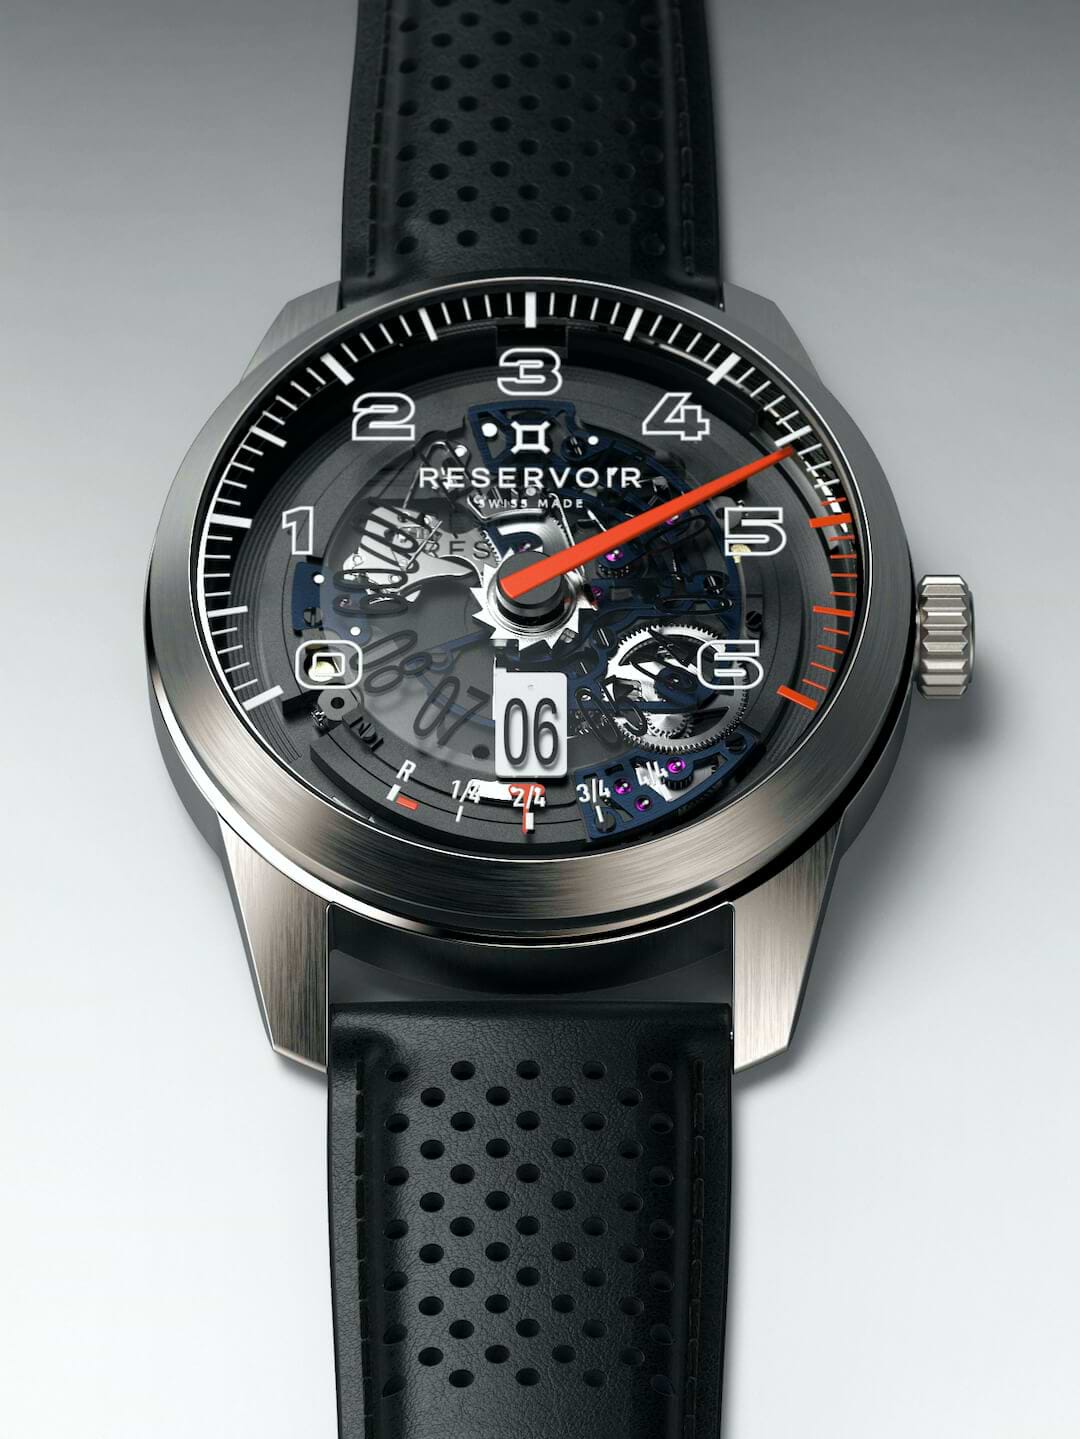 Luxury RESERVOIR watch in media editorial featuring light grey, dark charcoal, and dark greyish brown.